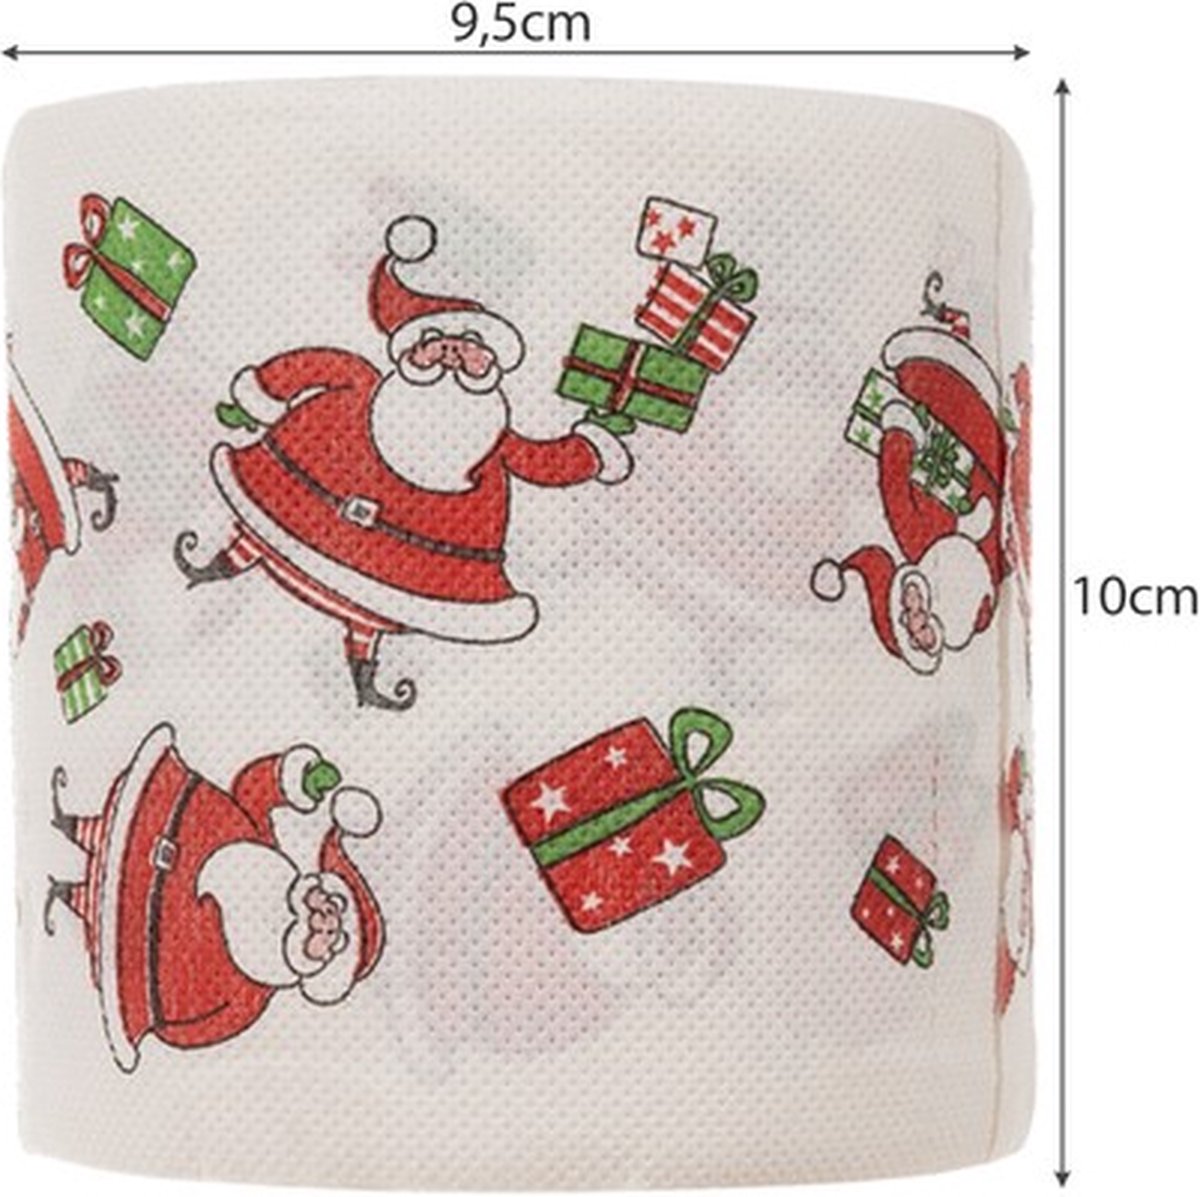 Kerst toiletpapier - 4 rols WC W.C. / promoballons import